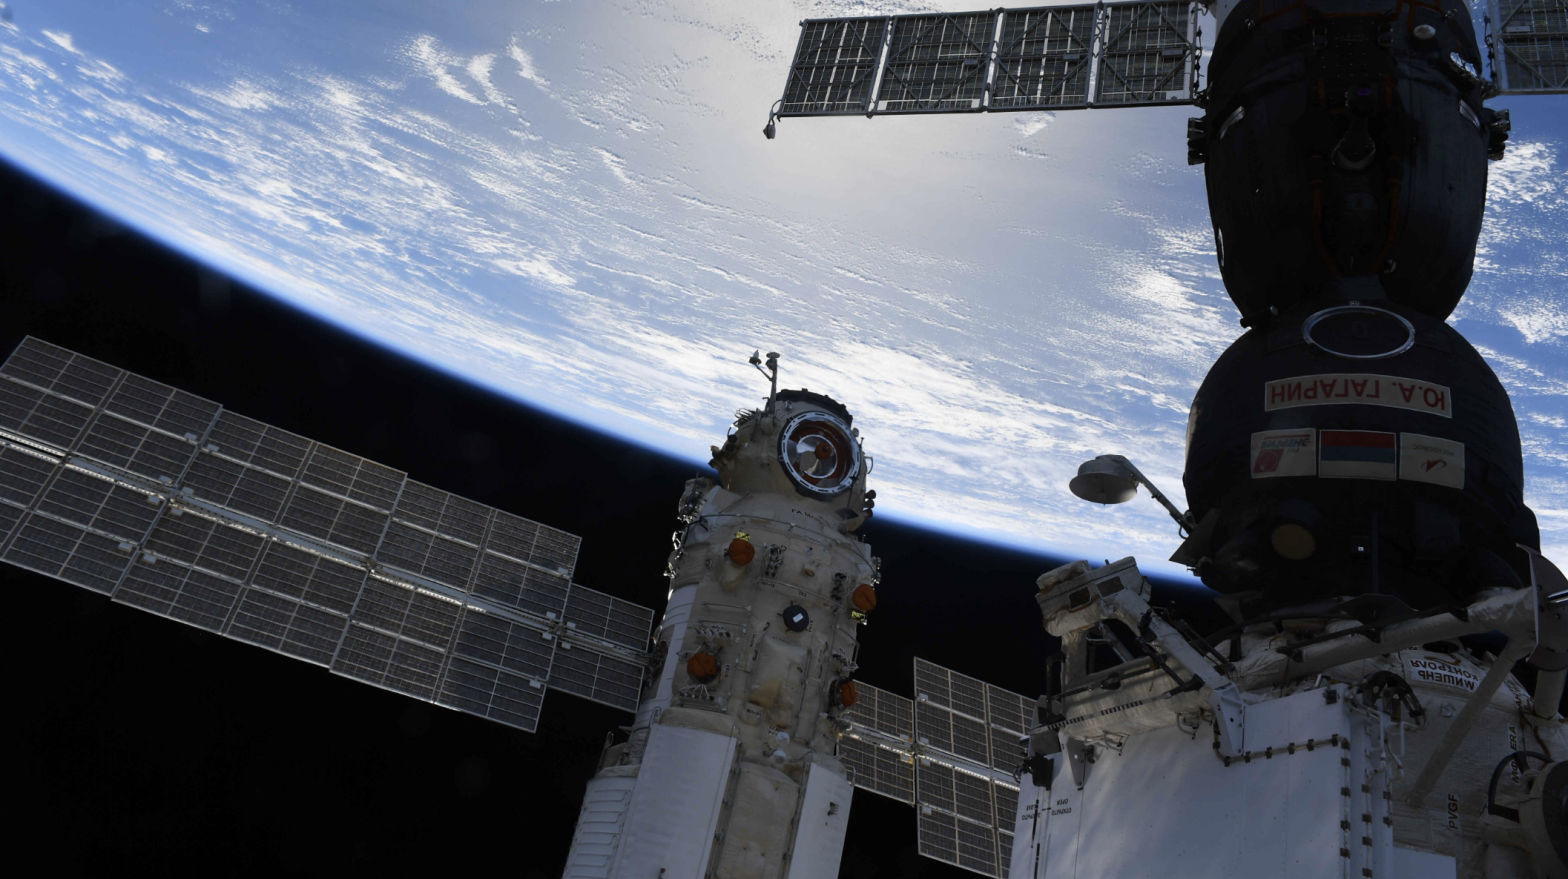 The Nauka module next to a Soyuz spacecraft.  (Image: Roscosmos)